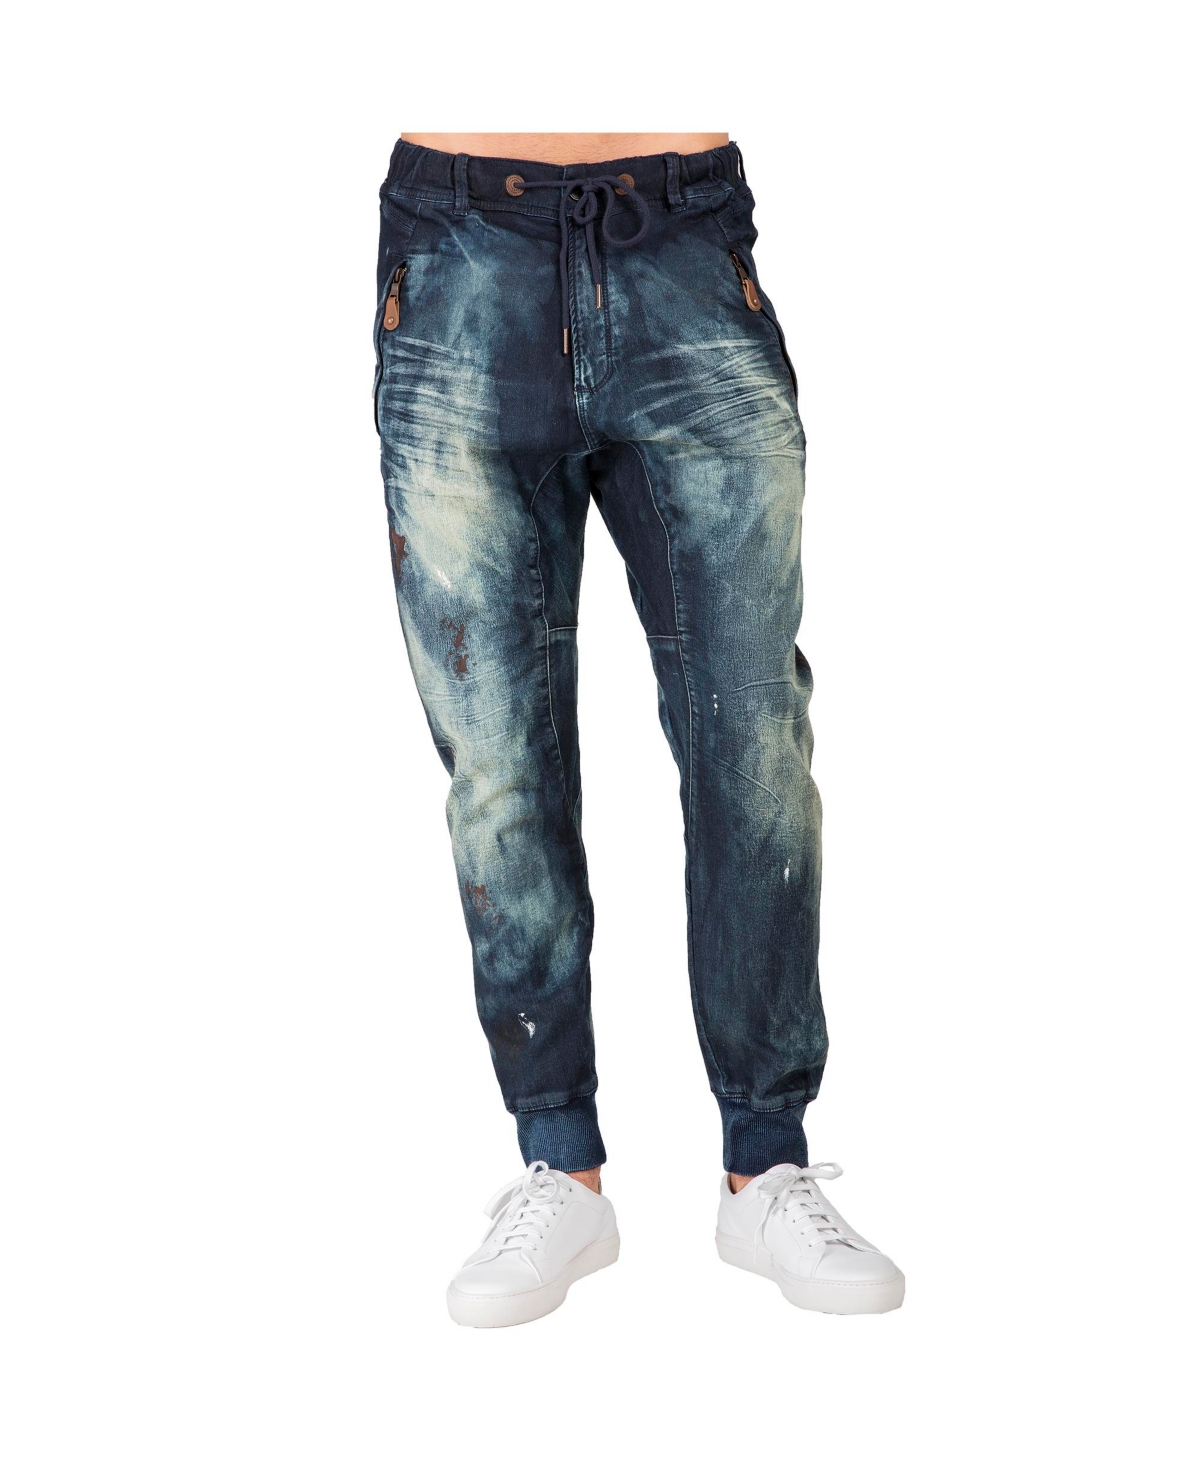 Men's Premium Knit Denim Jogger jeans - Blue striker